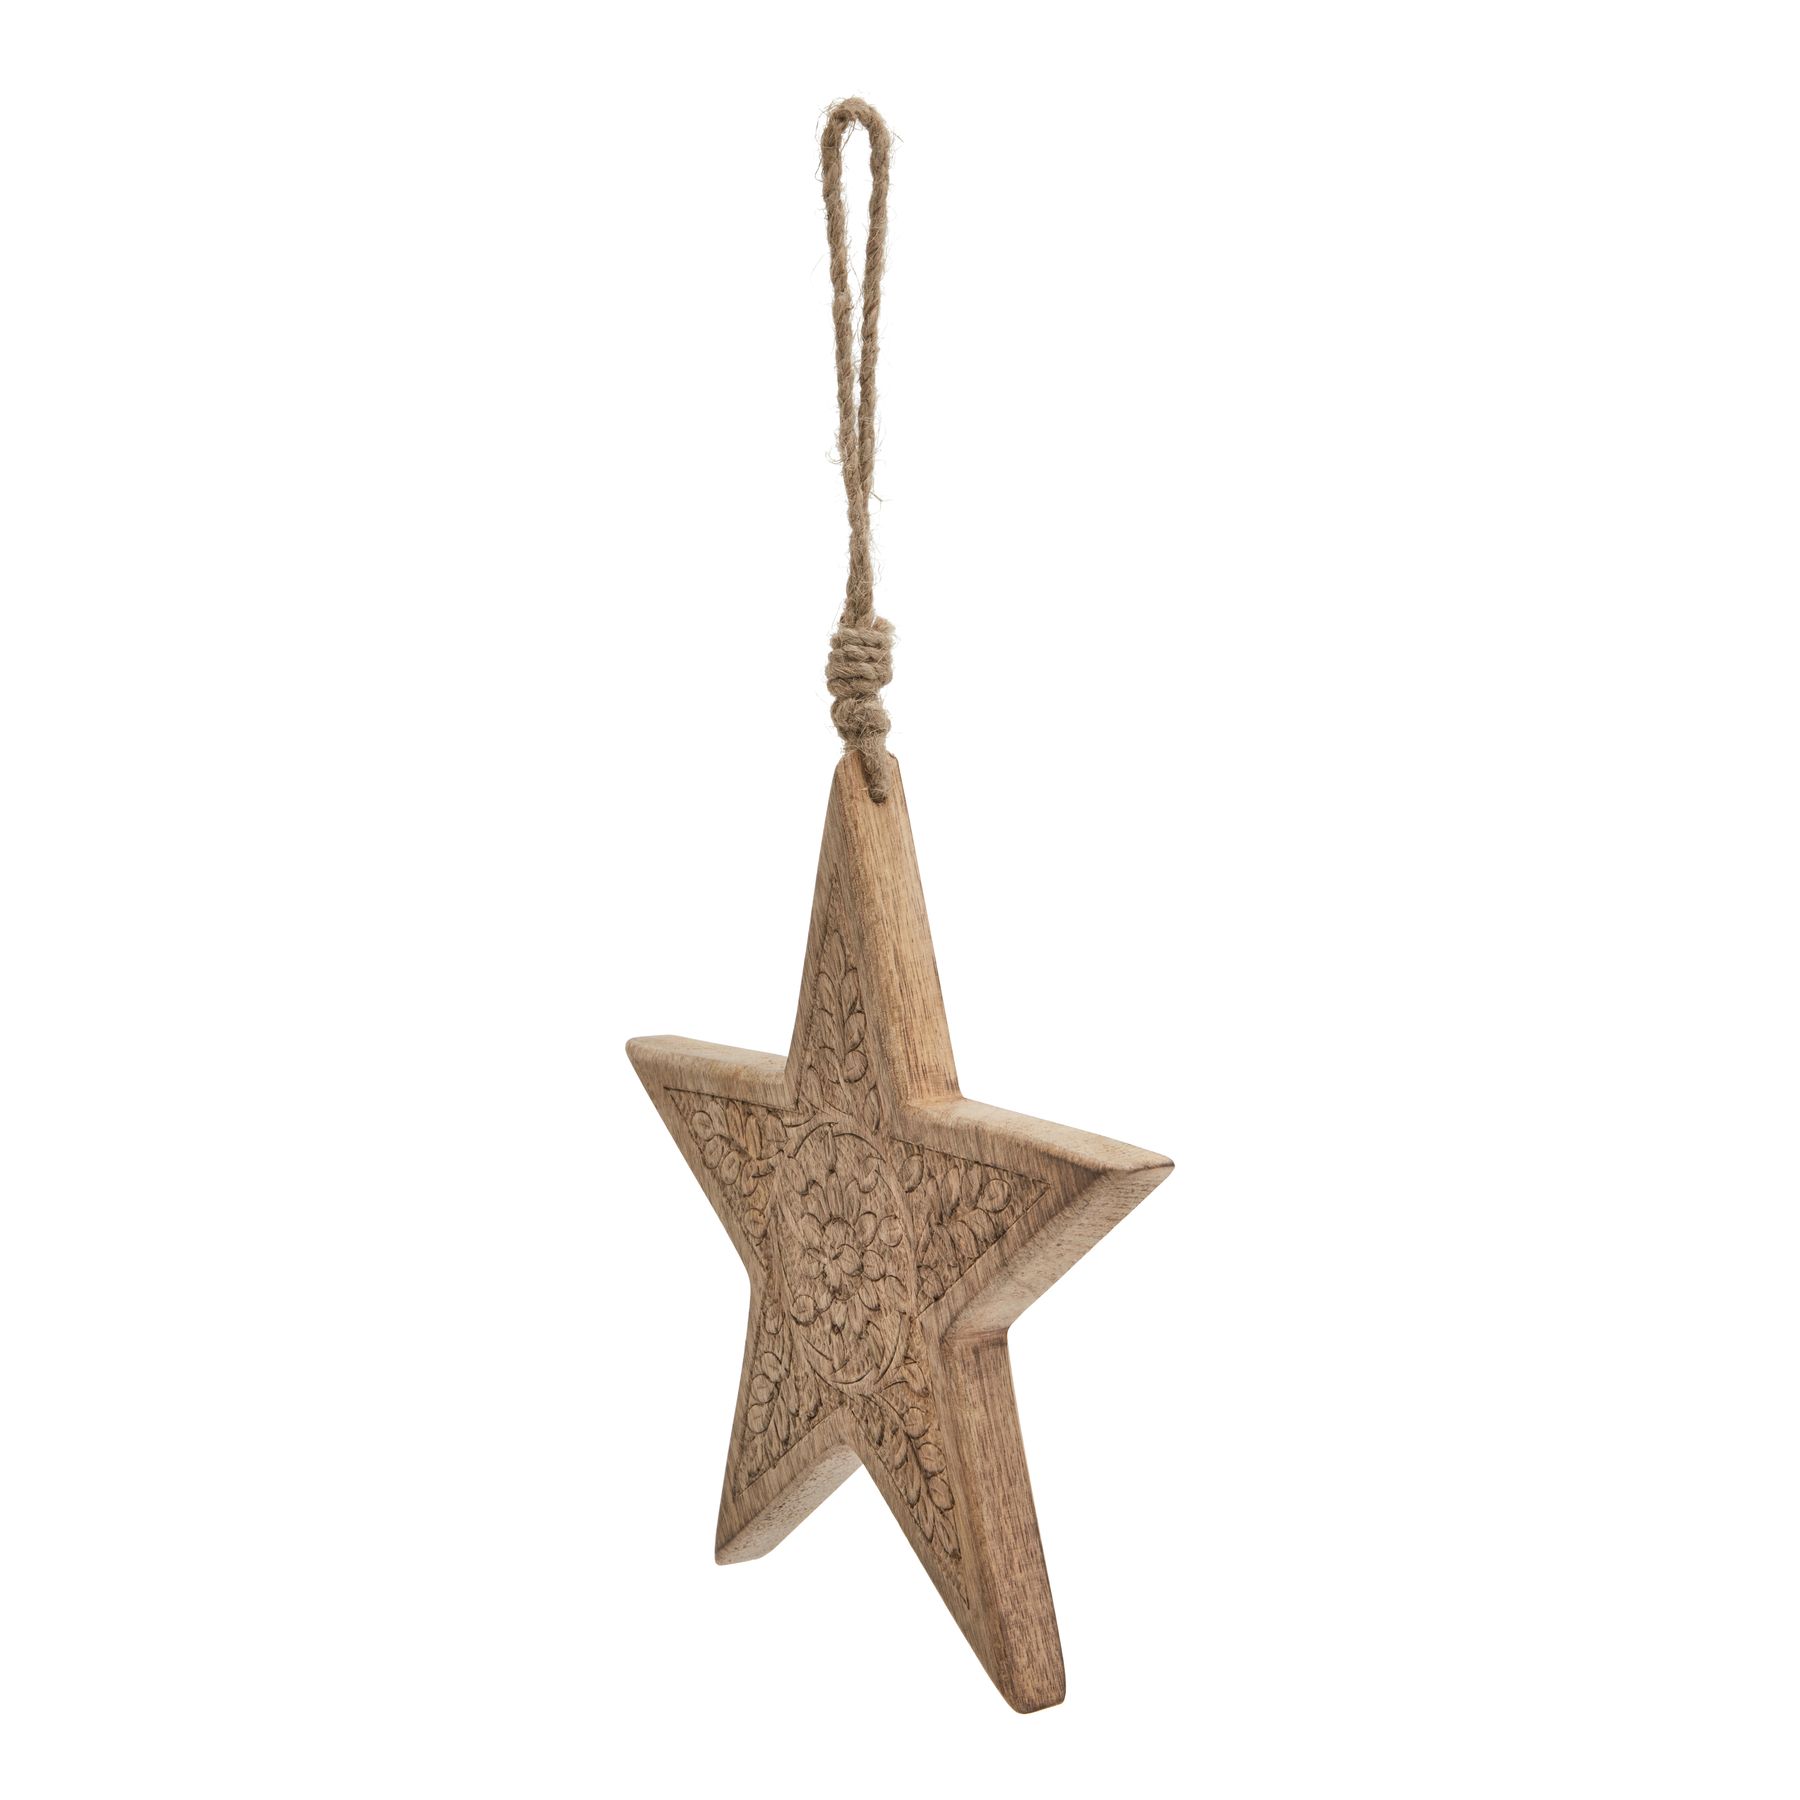 Natural Wooden Patterned Hanging Star - Image 1